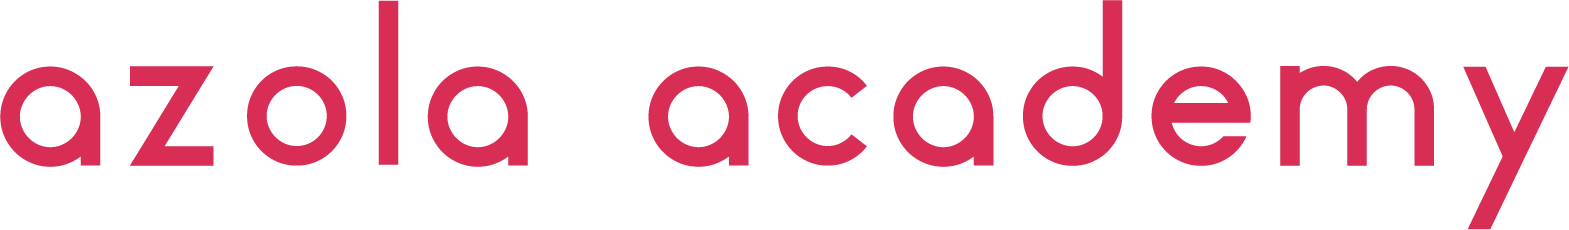 Azola Academy logo